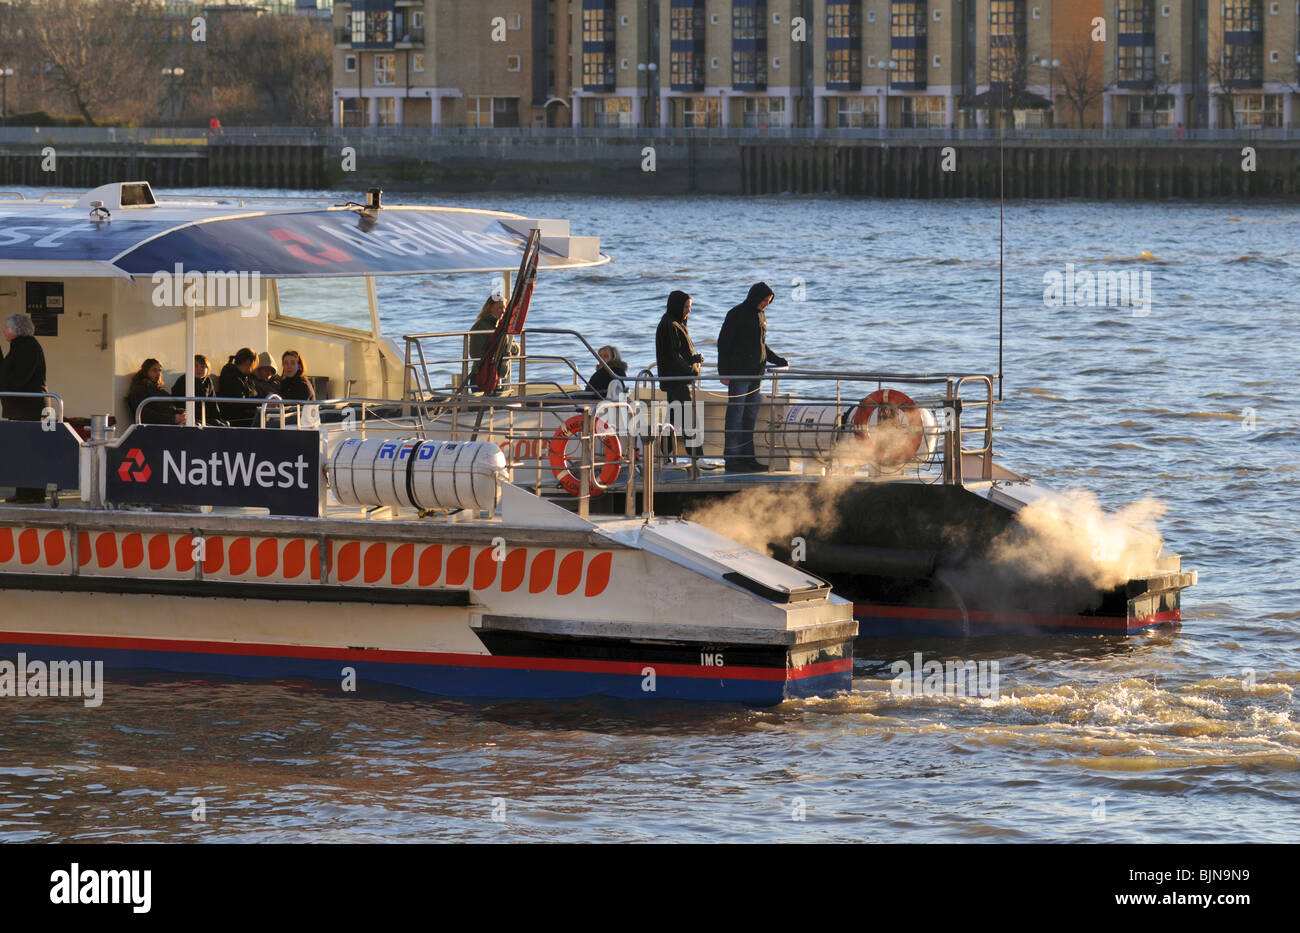 Thames Clipper Riverboat am Canary Wharf Pier Steg, London E14, Vereinigtes Königreich Stockfoto